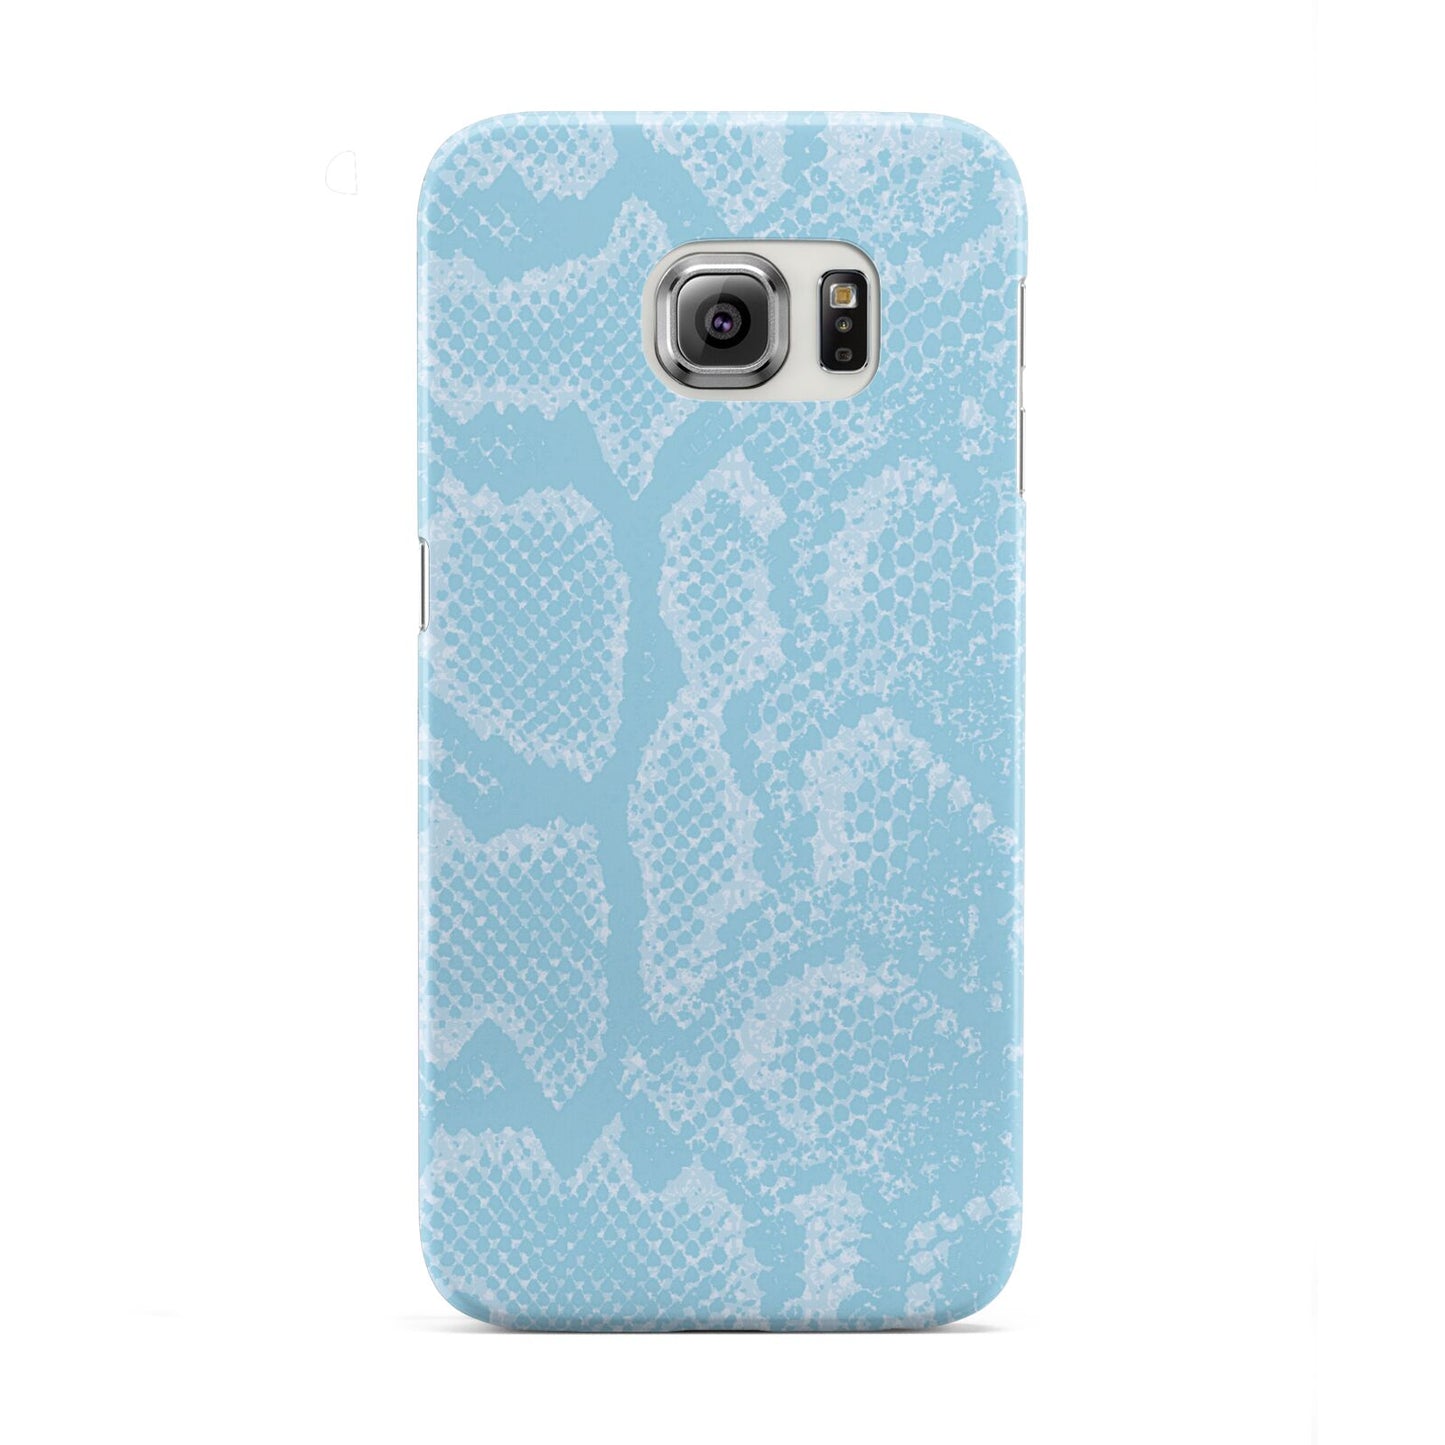 Blue Snakeskin Samsung Galaxy S6 Edge Case